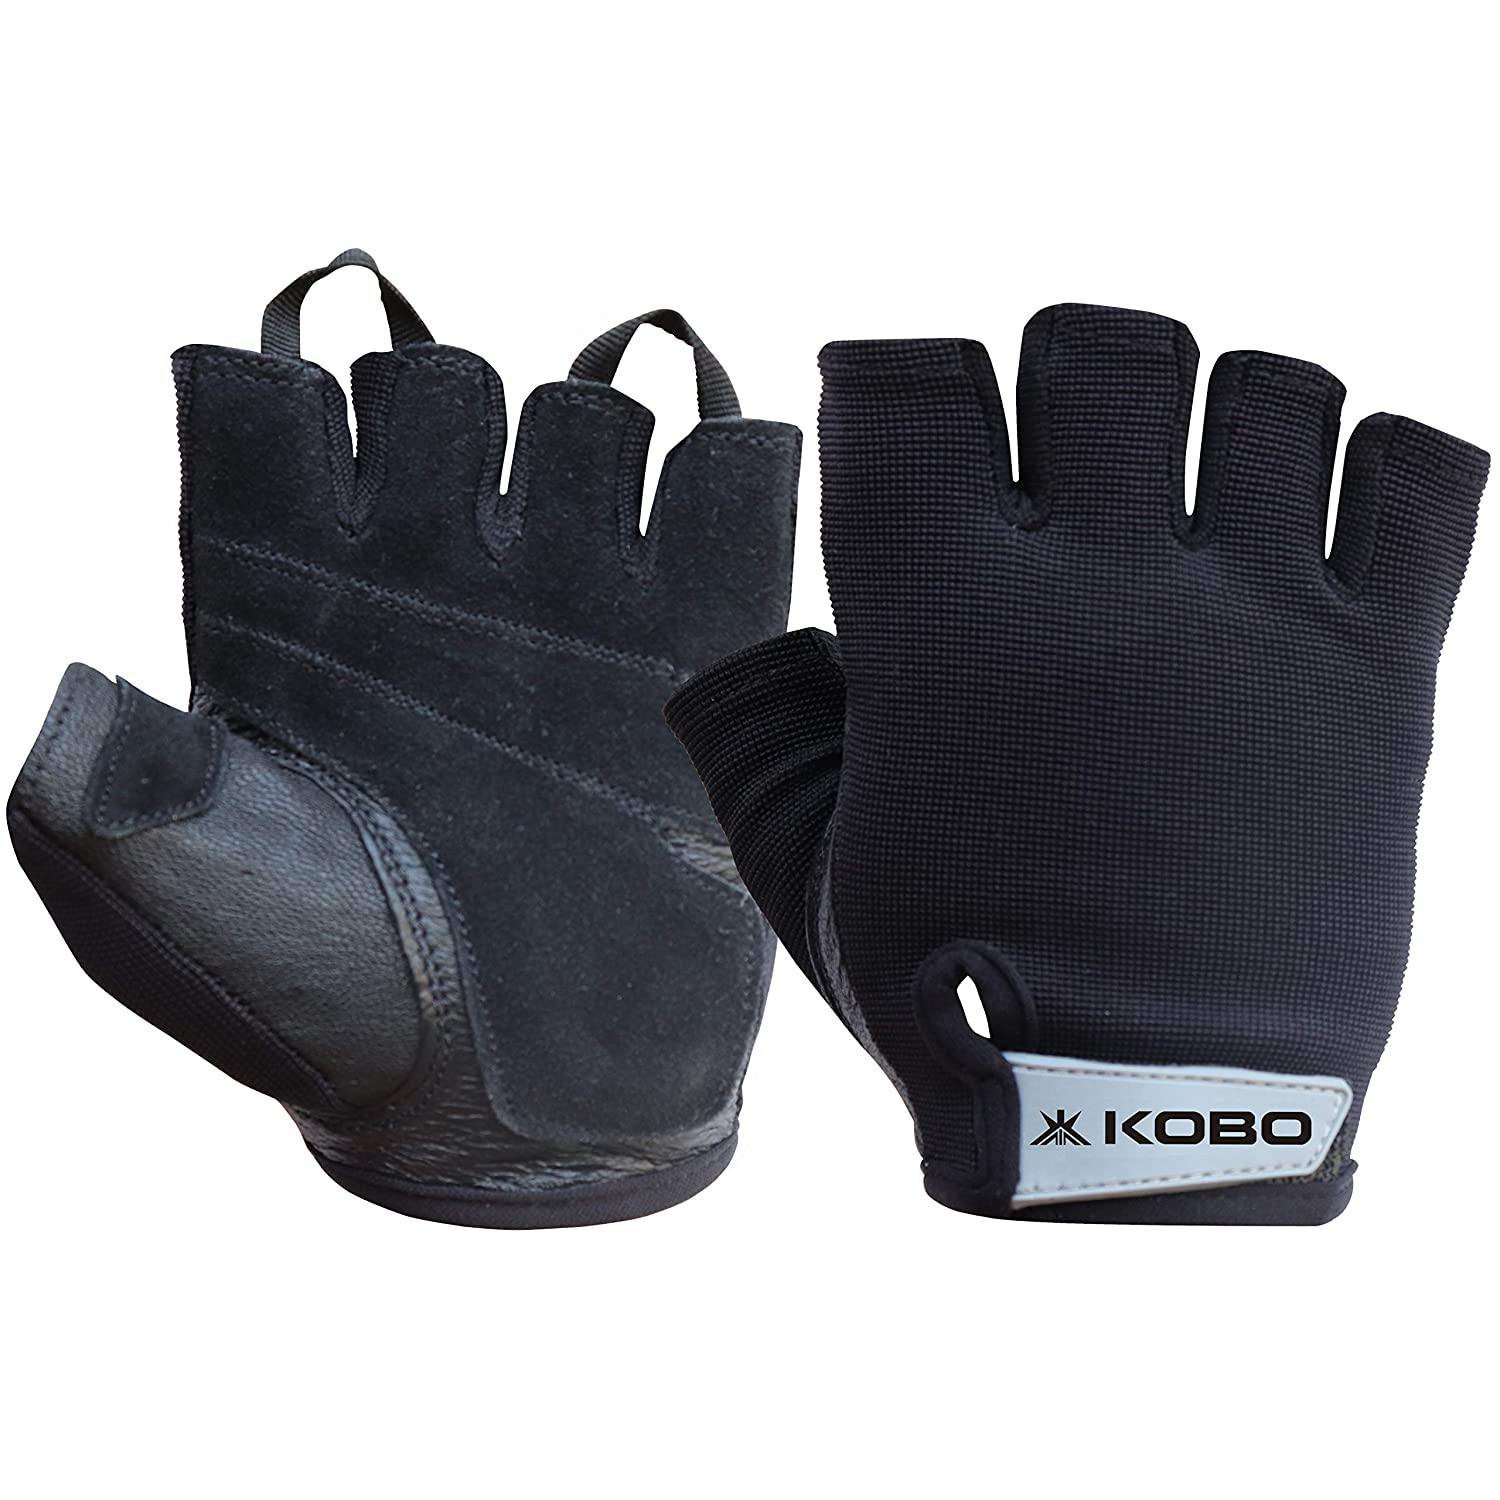 Kobo WTG48 Gym Gloves, Black - Best Price online Prokicksports.com